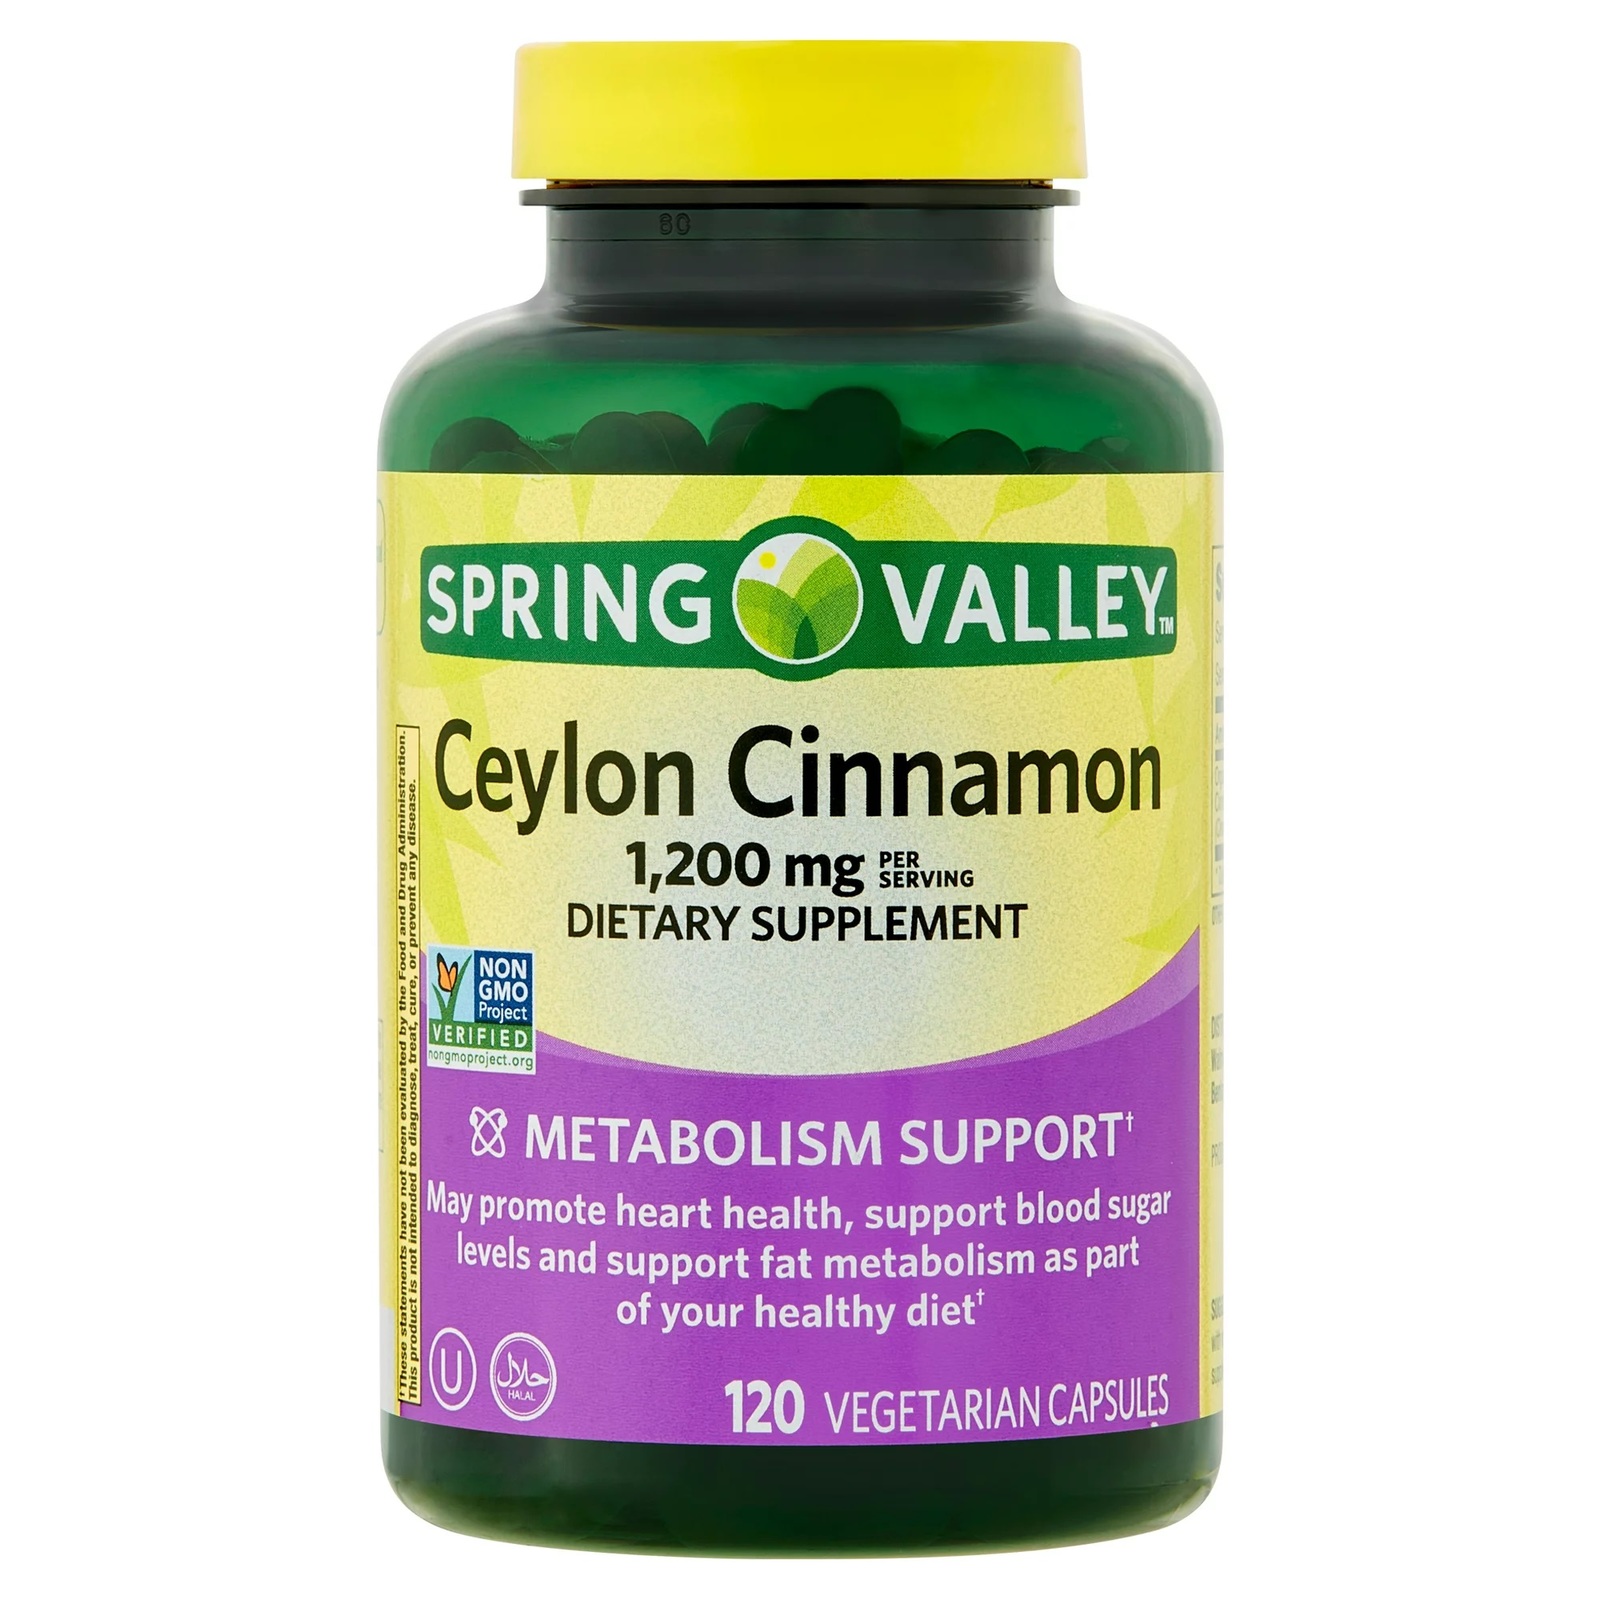 Spring Valley Ceylon Cinnamon Dietary Supplement, 1,200 mg, 120 Vegetarian Caps - $22.15